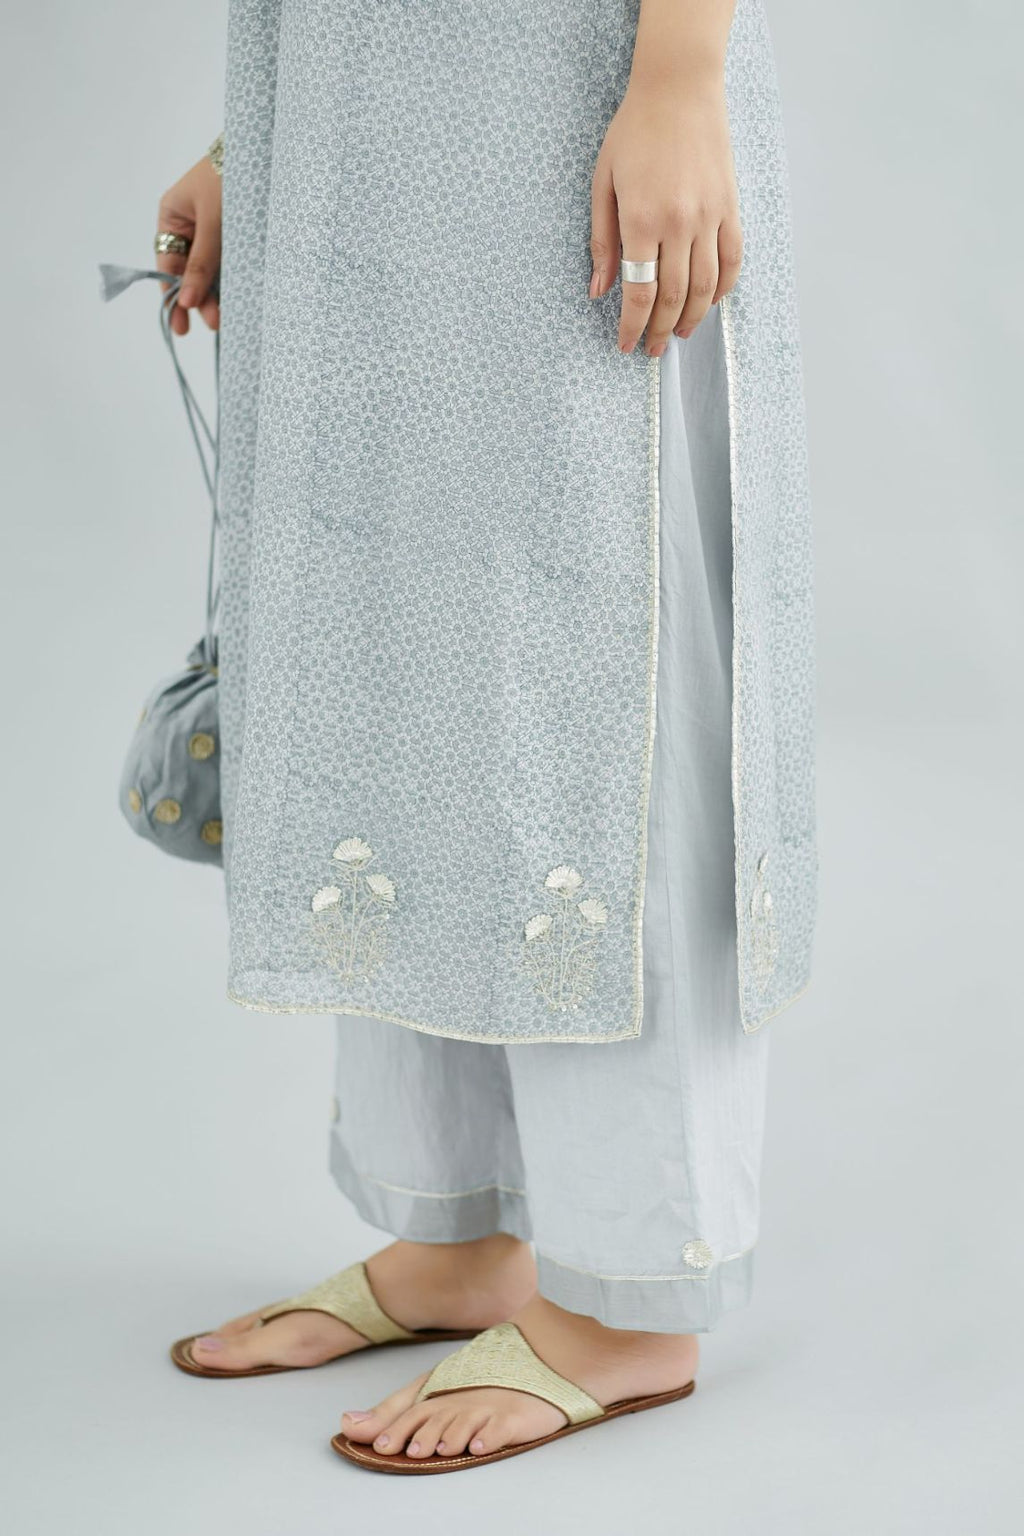 Steel blue hand block printed silk chanderi kurta set with silver gota embroidery